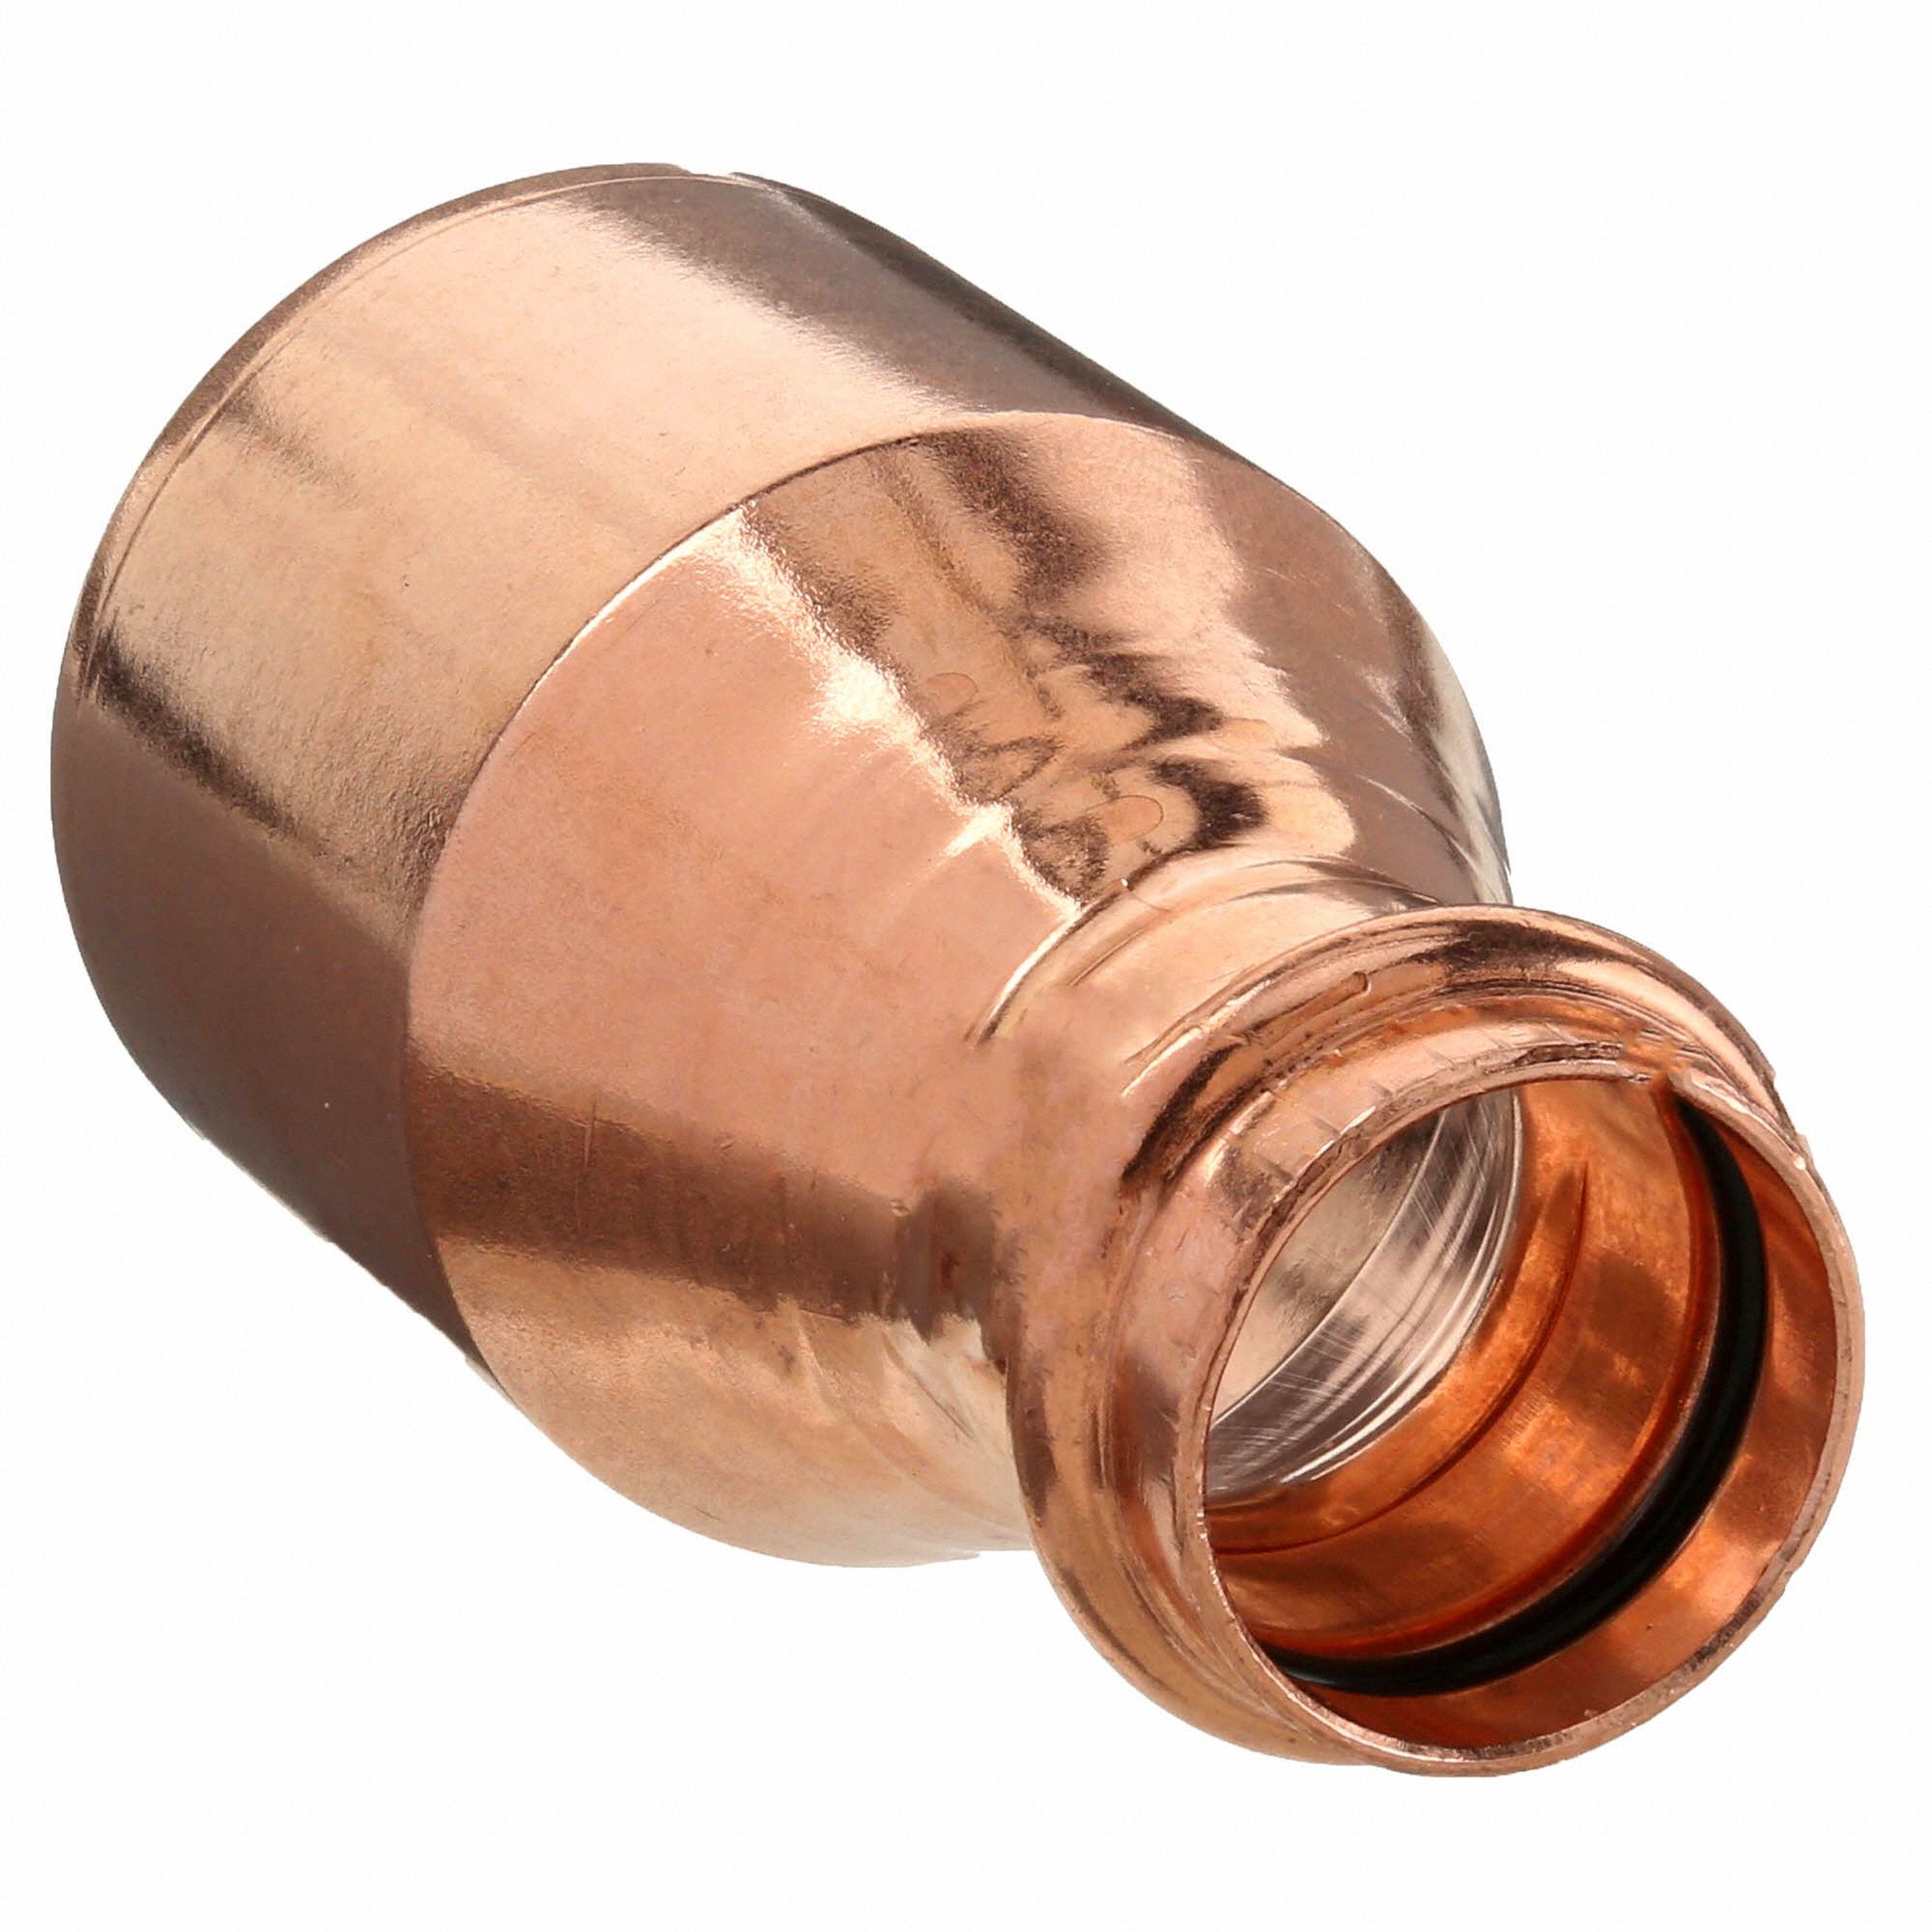 Viega 78107 1-1 2-inch x 4-inch Propress Copper Reducer Ftg C for sale online 